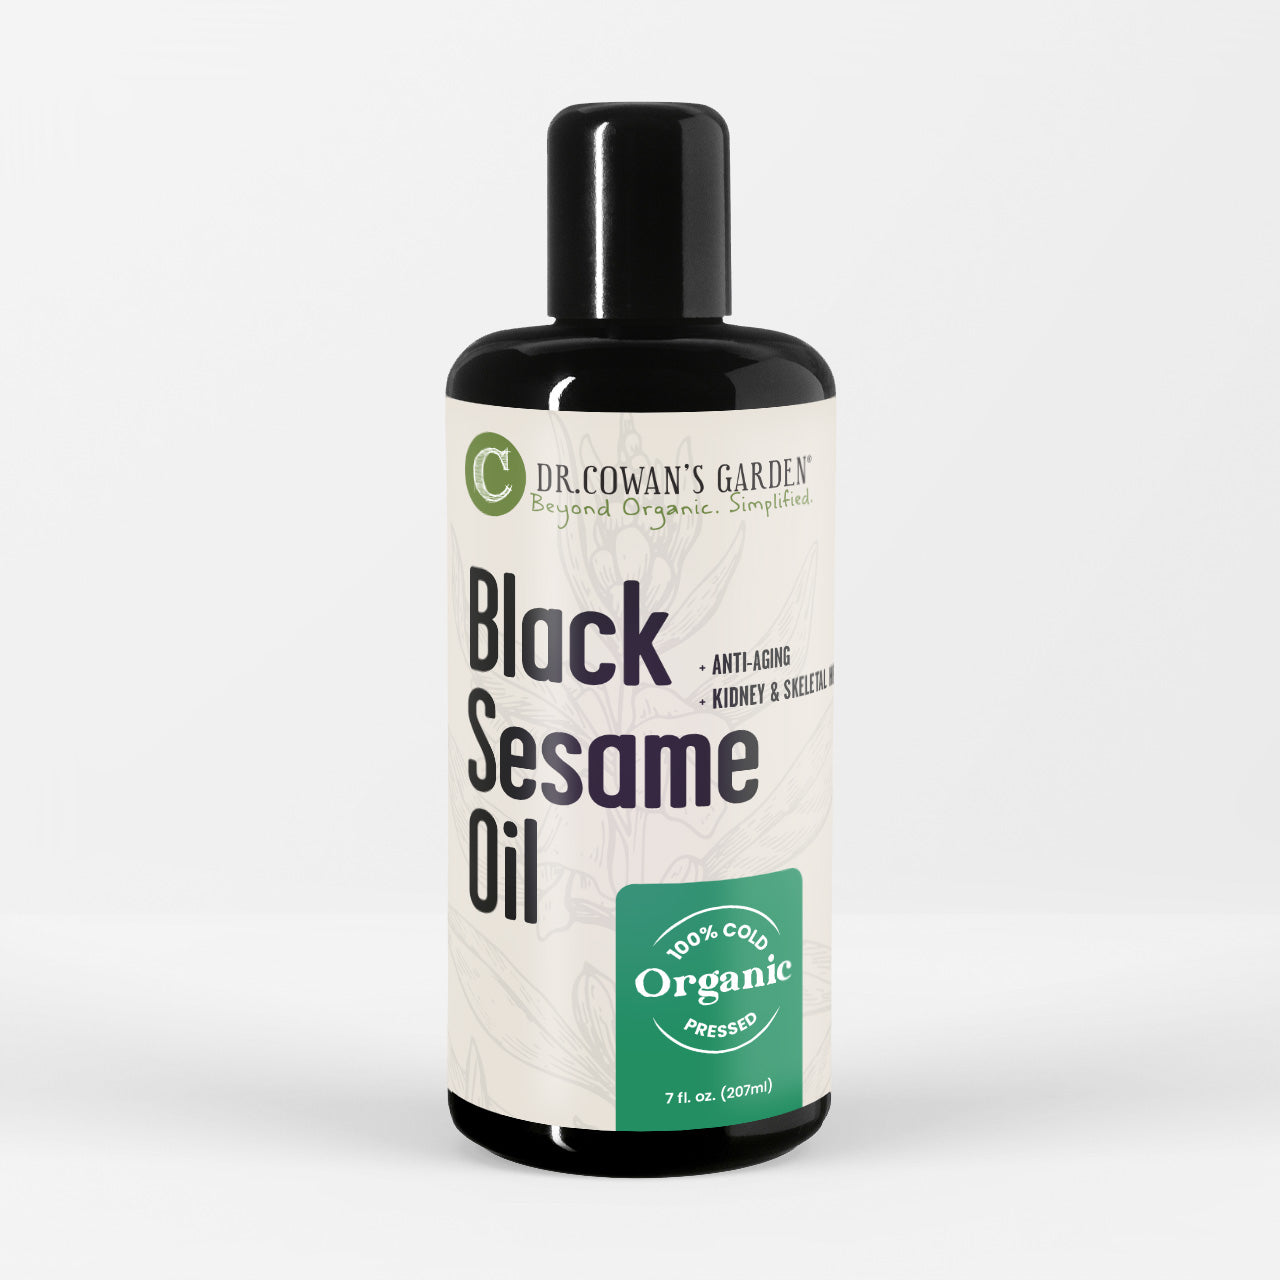 Cold Pressed Sesame Oil, 100% Natural Organic